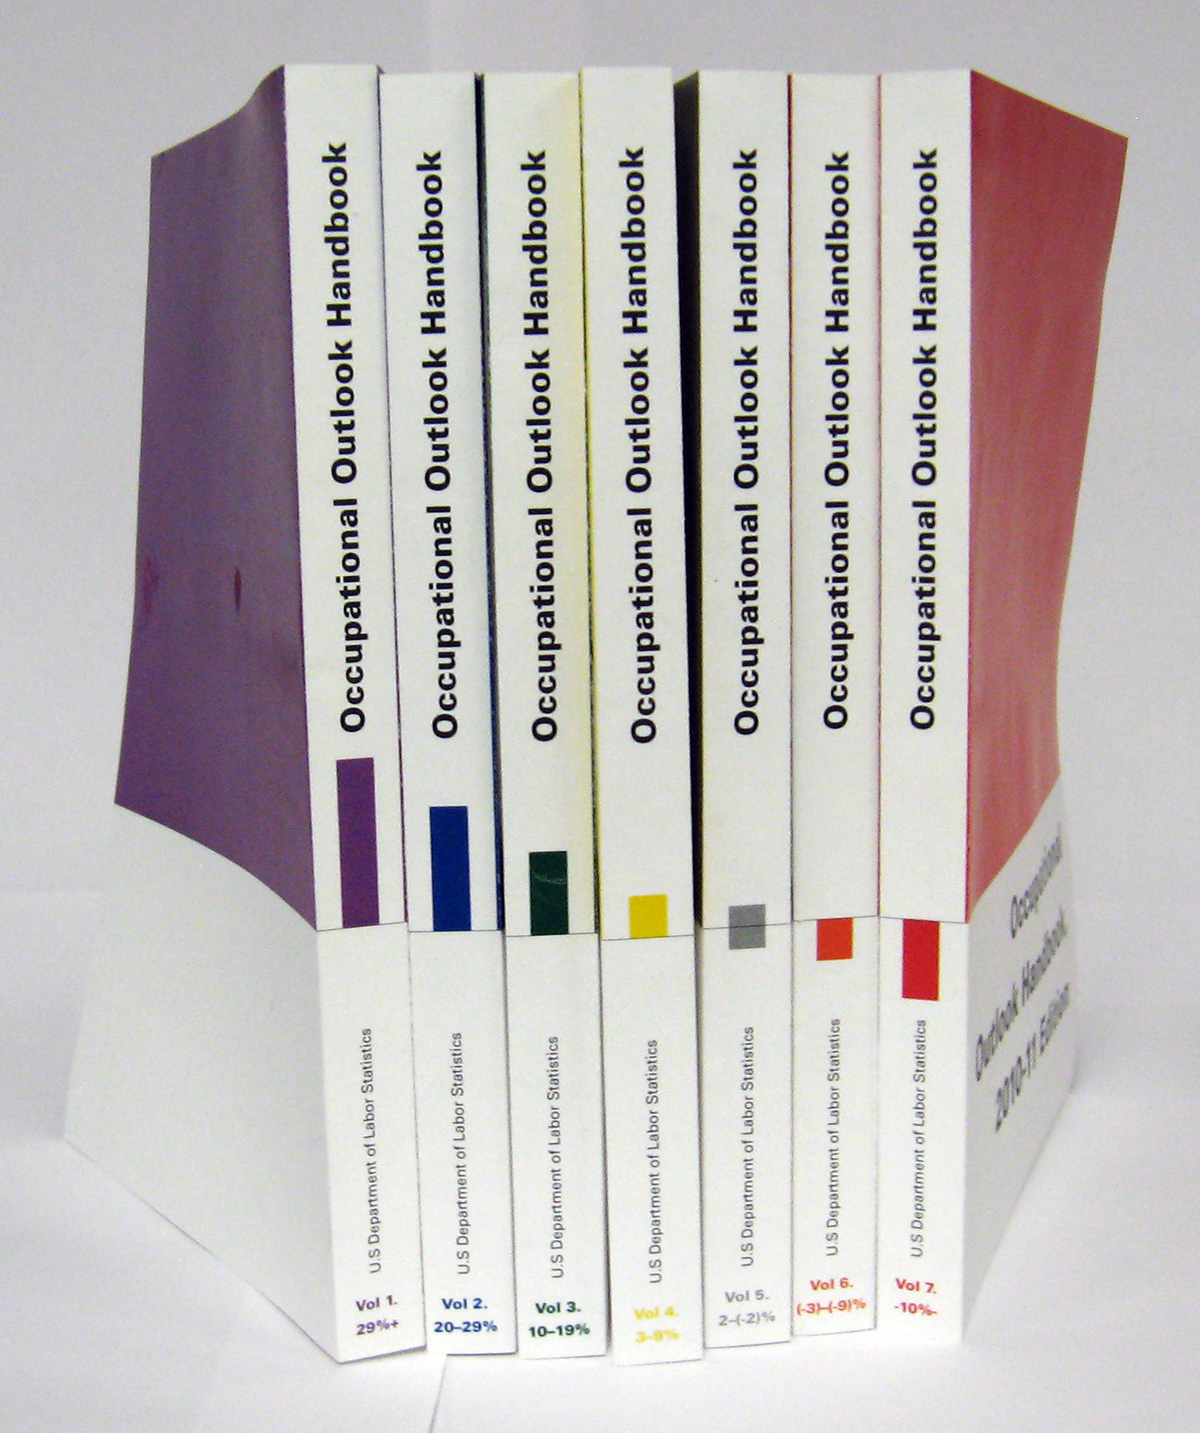 occupational outlook handbook book redesign